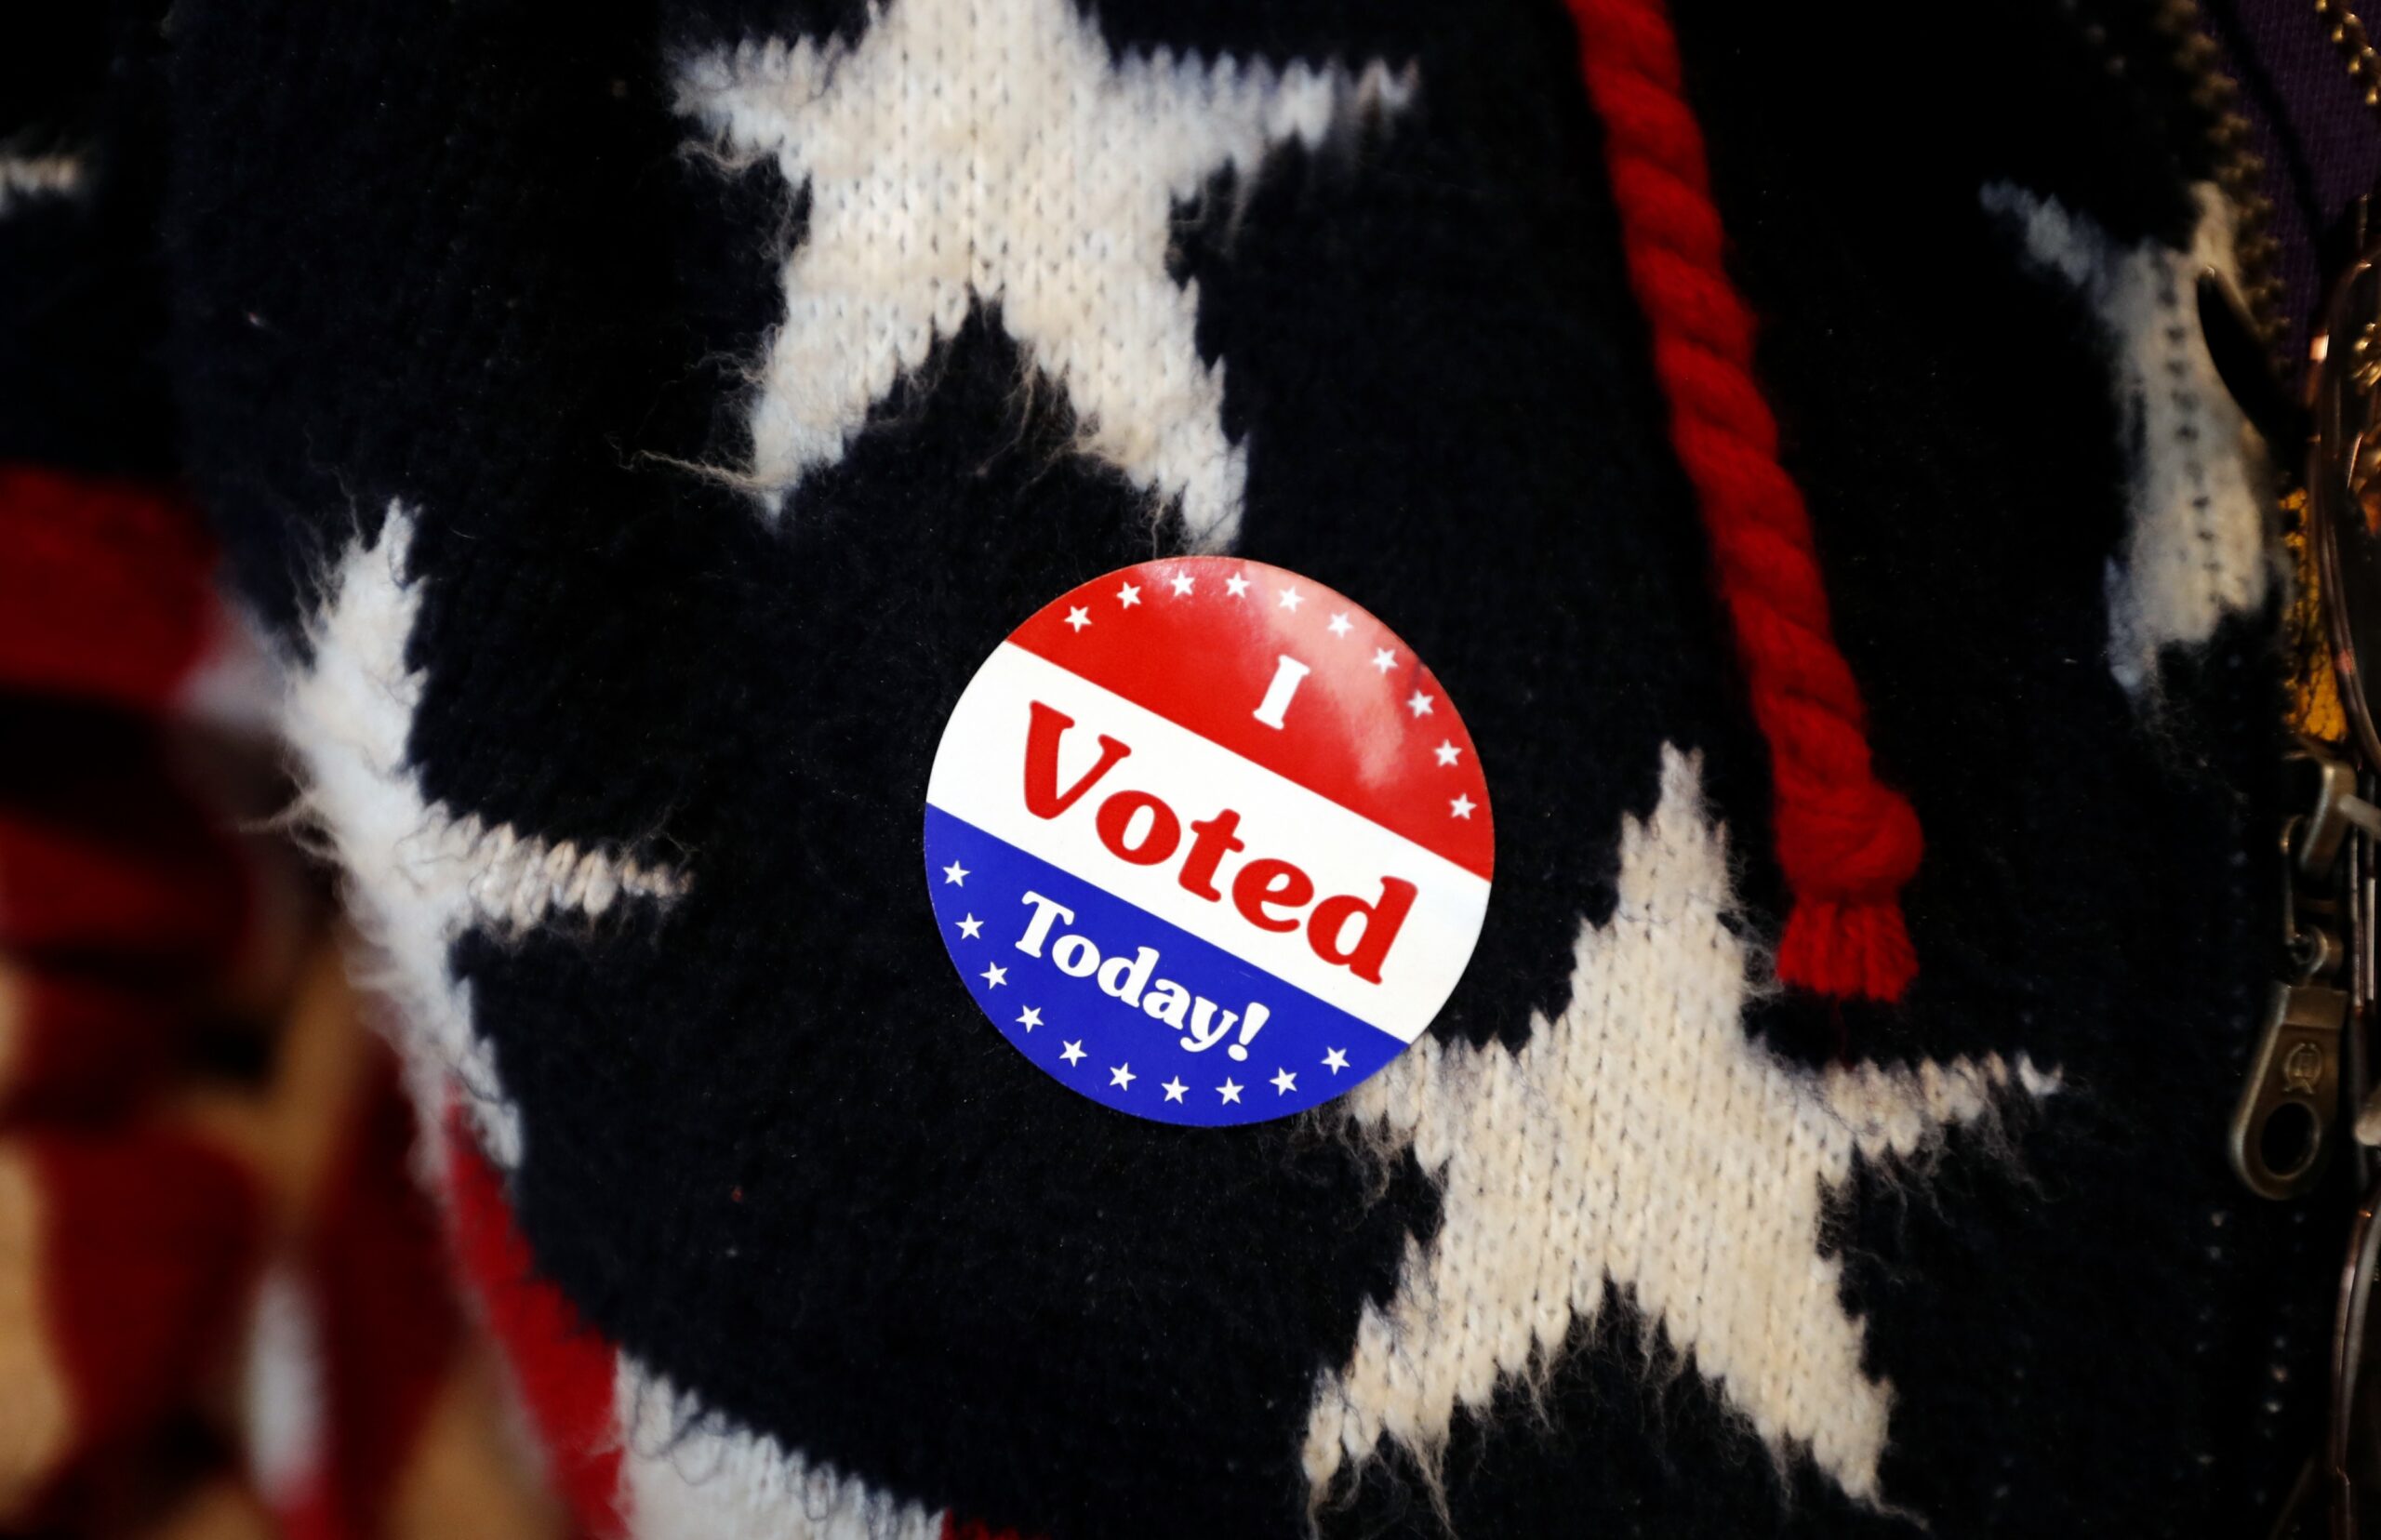 An "I Voted" sticker